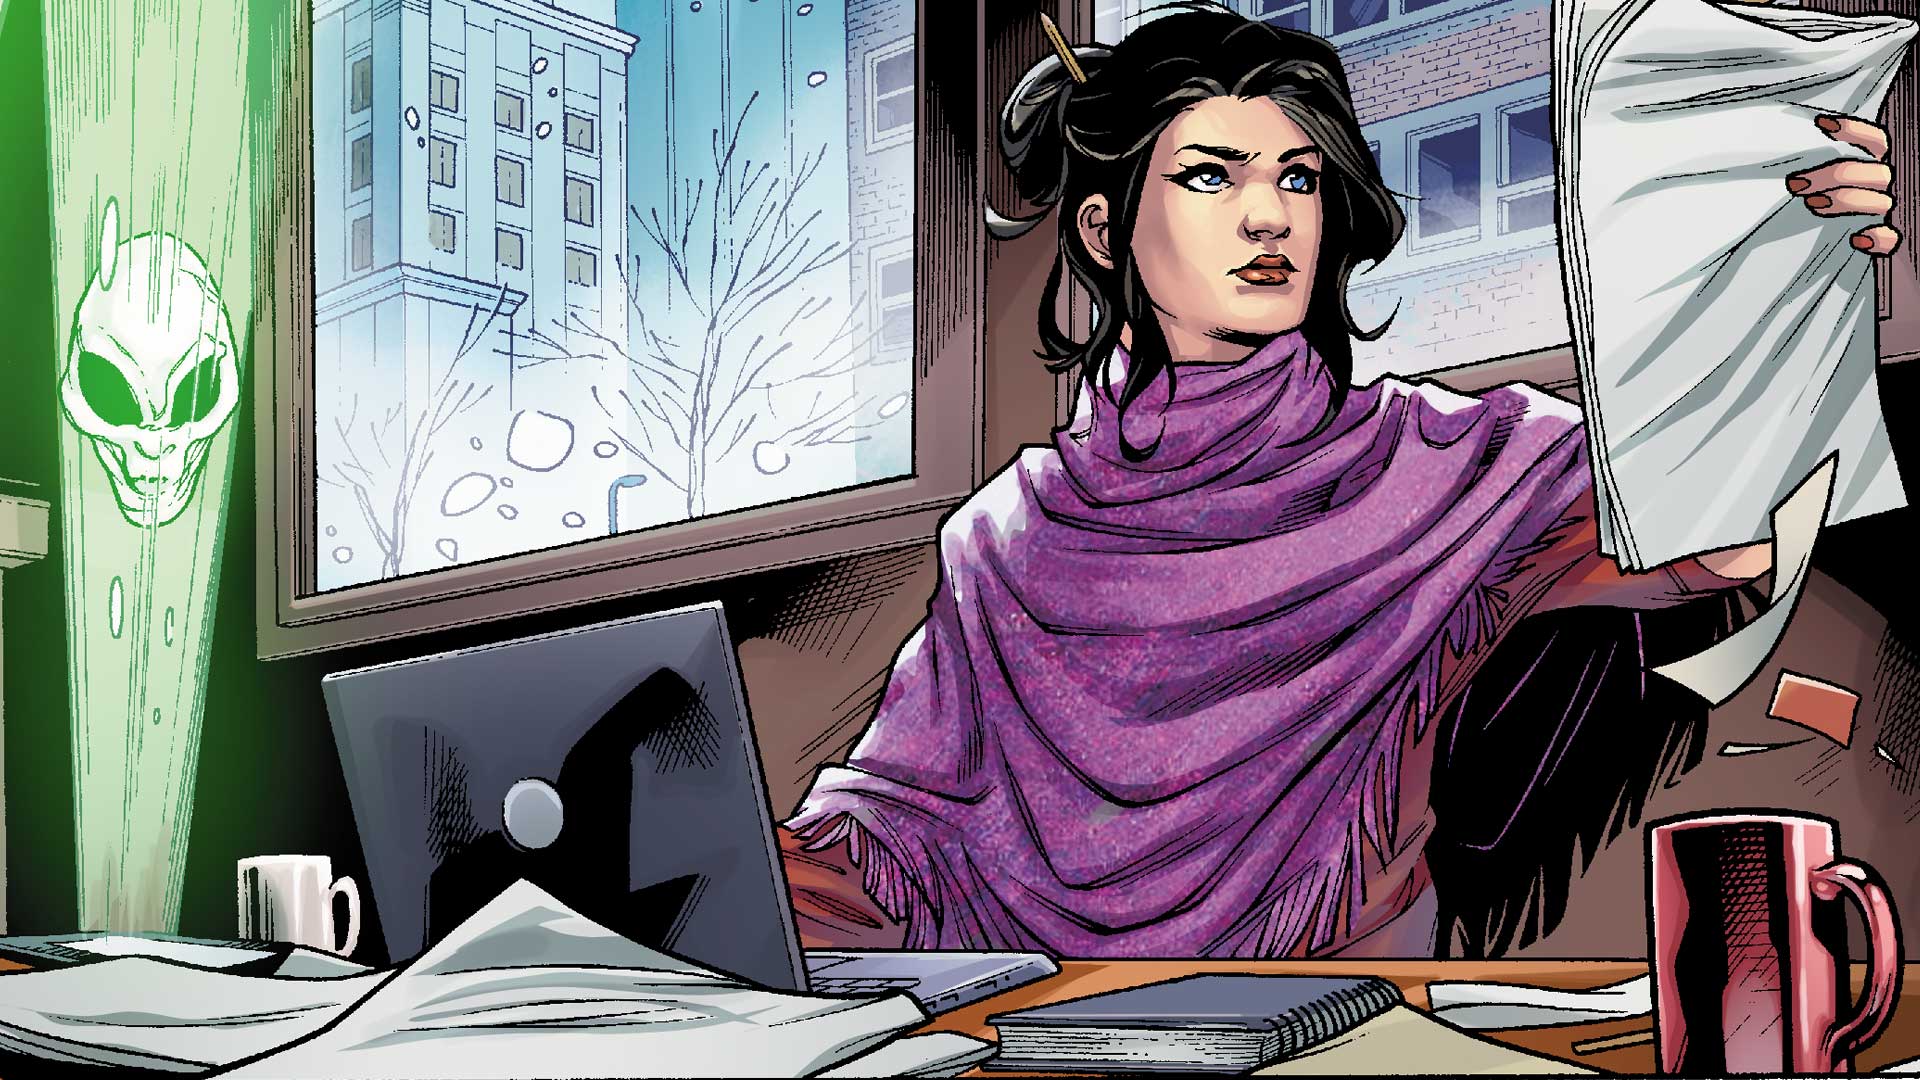 Lois Lane #4